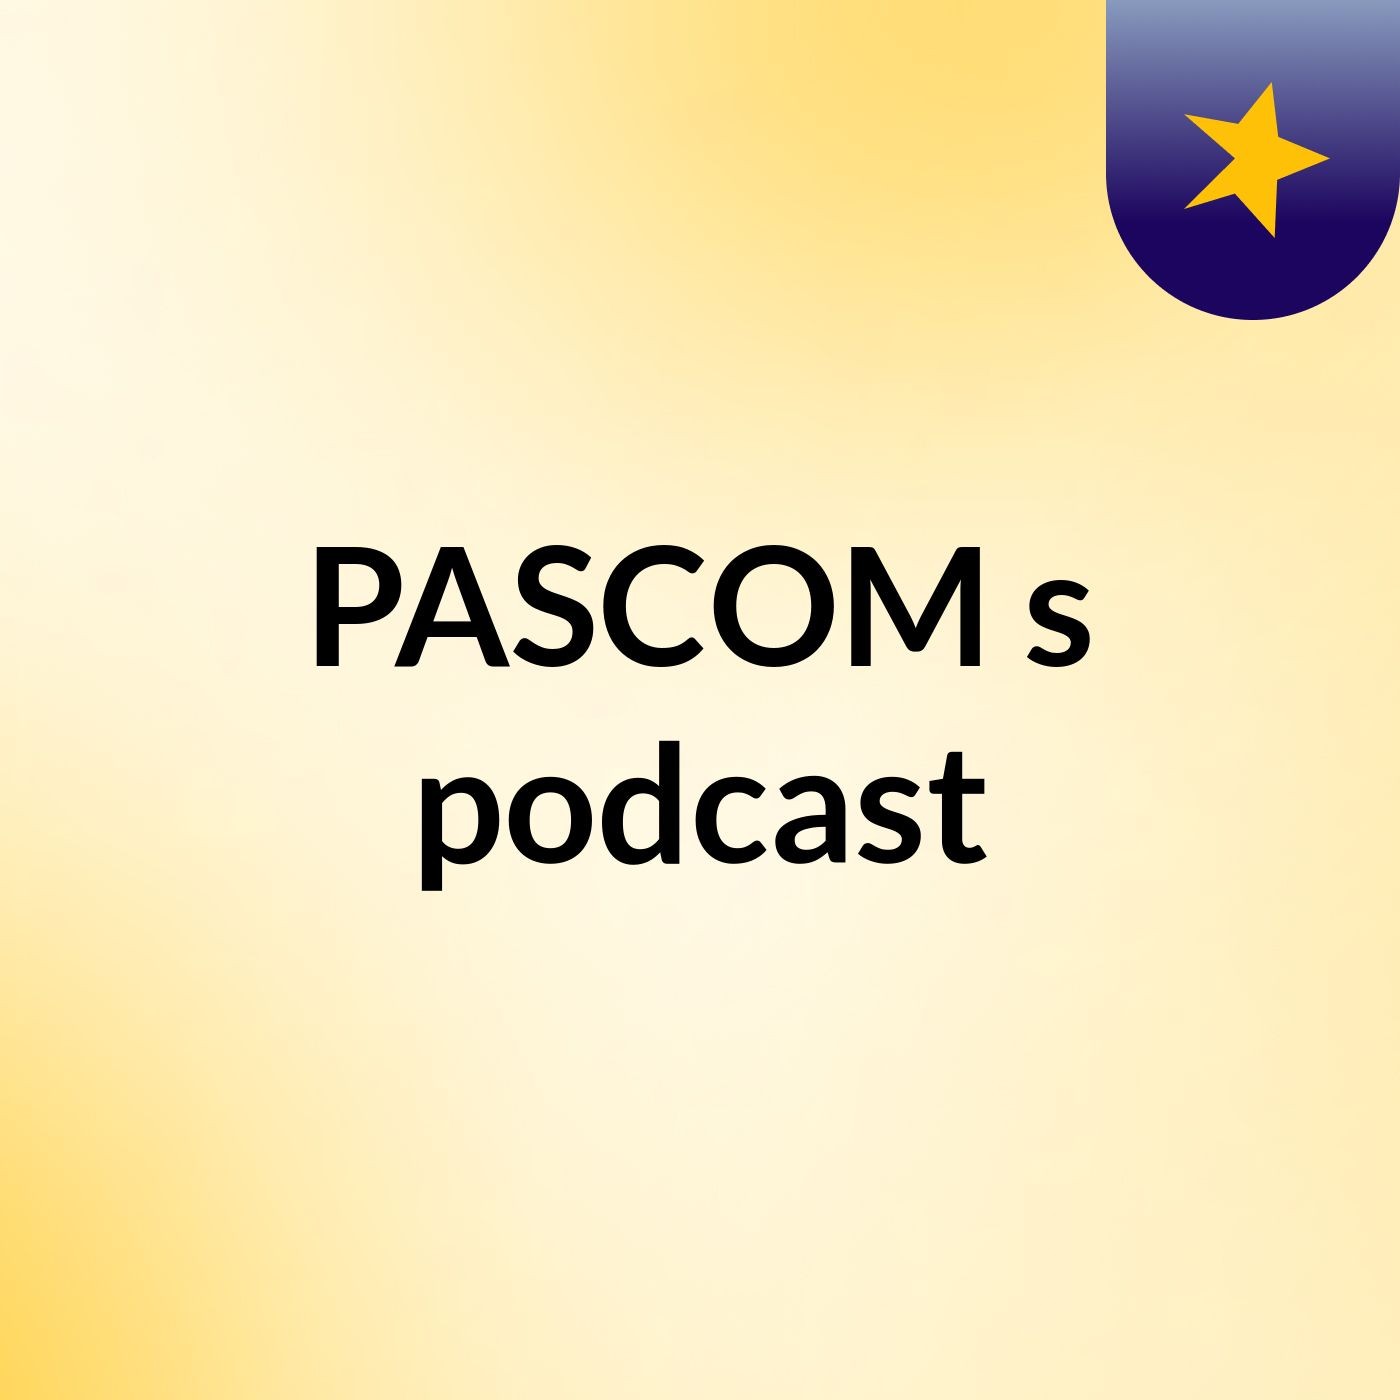 PASCOM's podcast